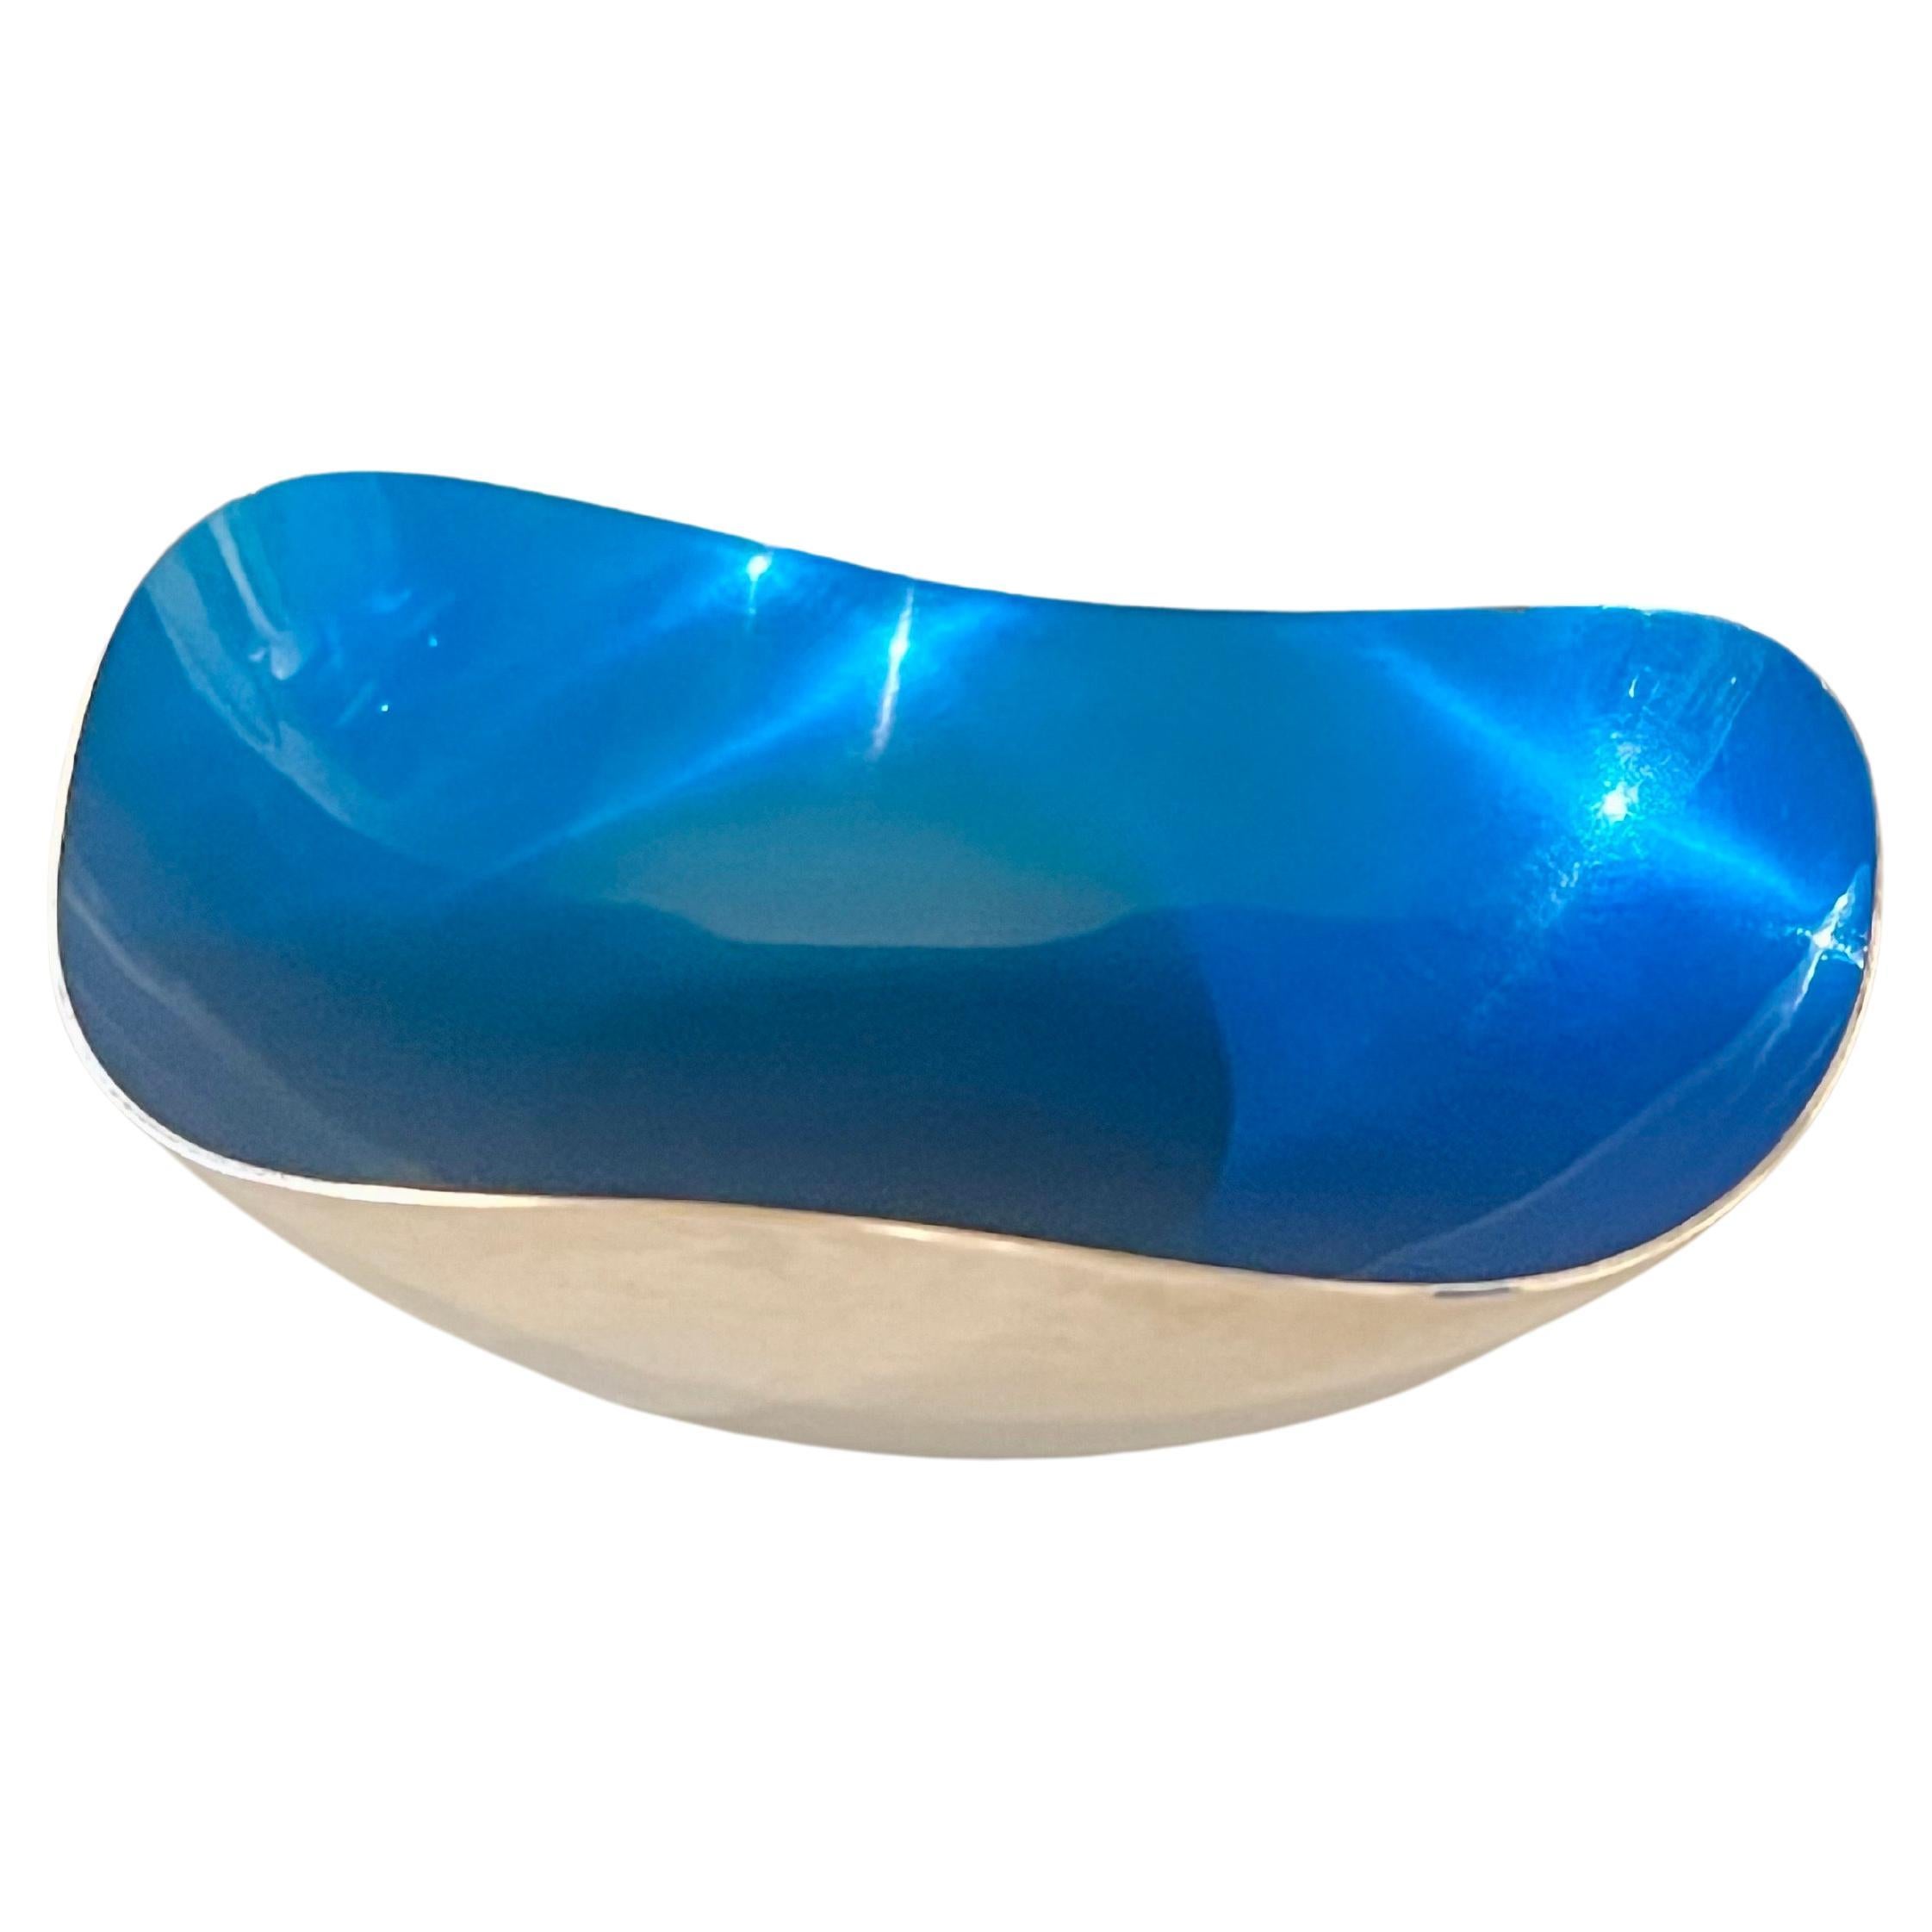 Danish Modern Blue Enameled Silver Plated Freeform Bowl by Meka Denmark For Sale